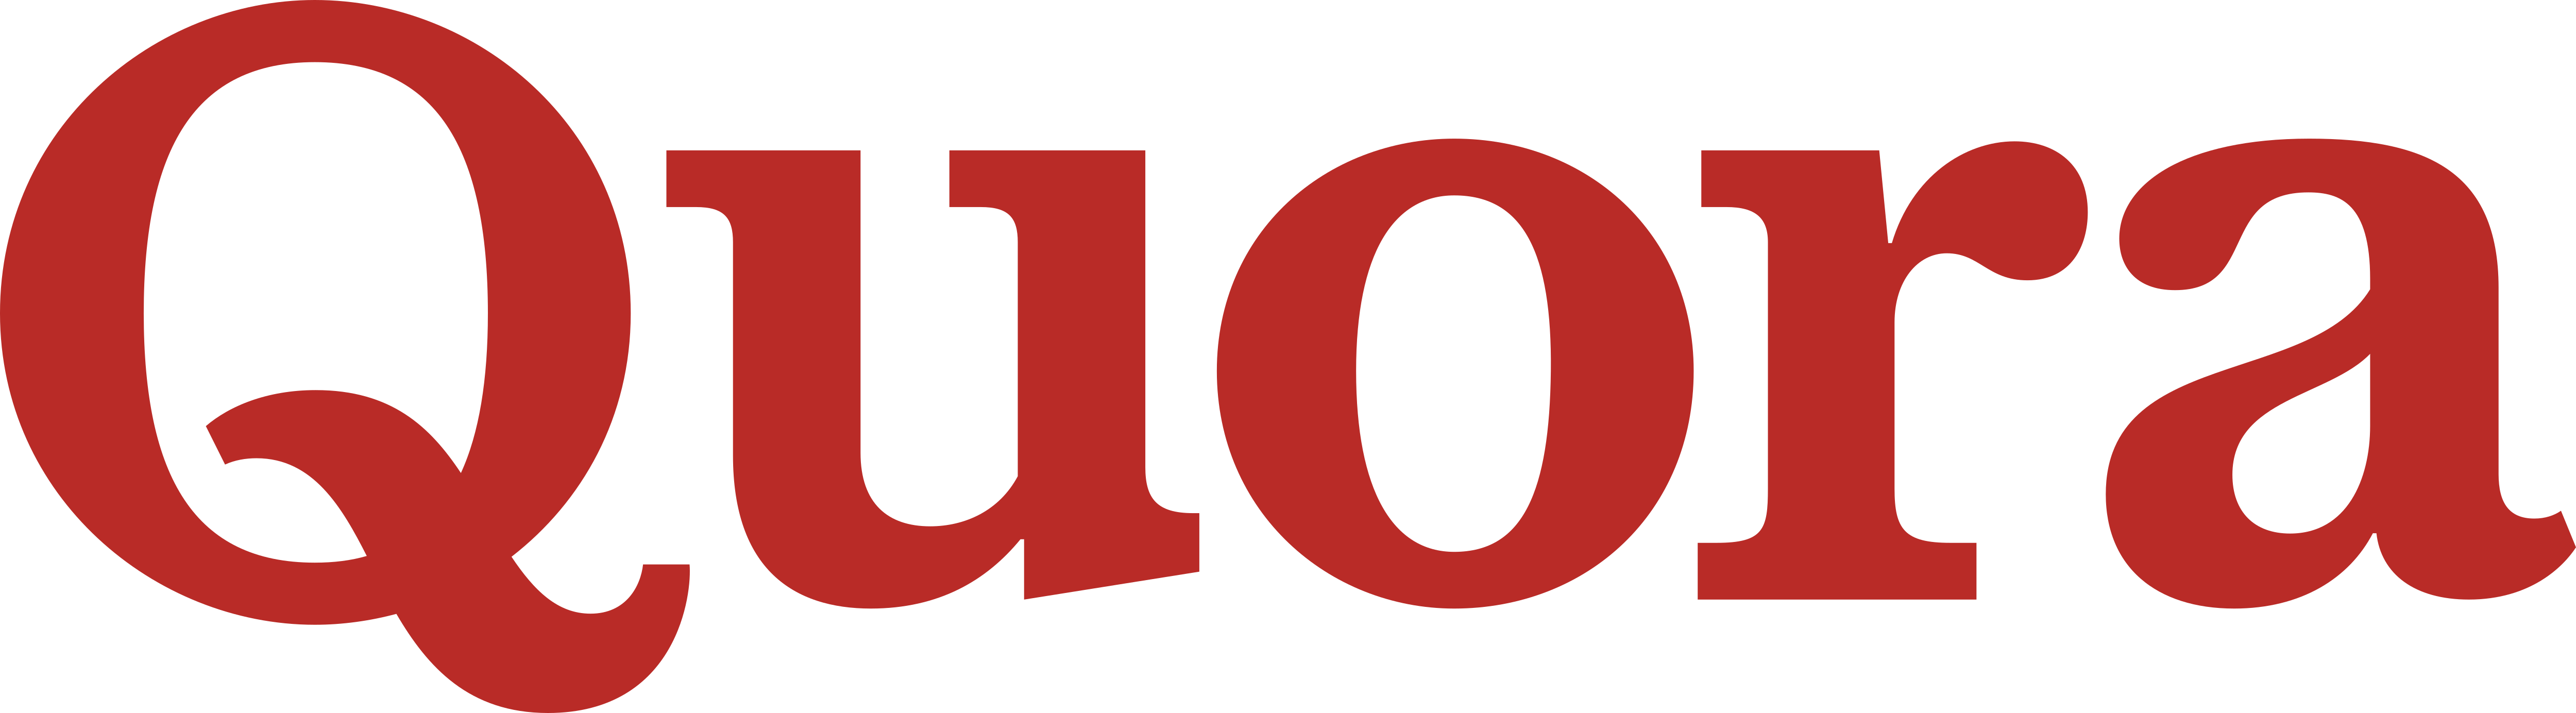 Quora - Logos Download